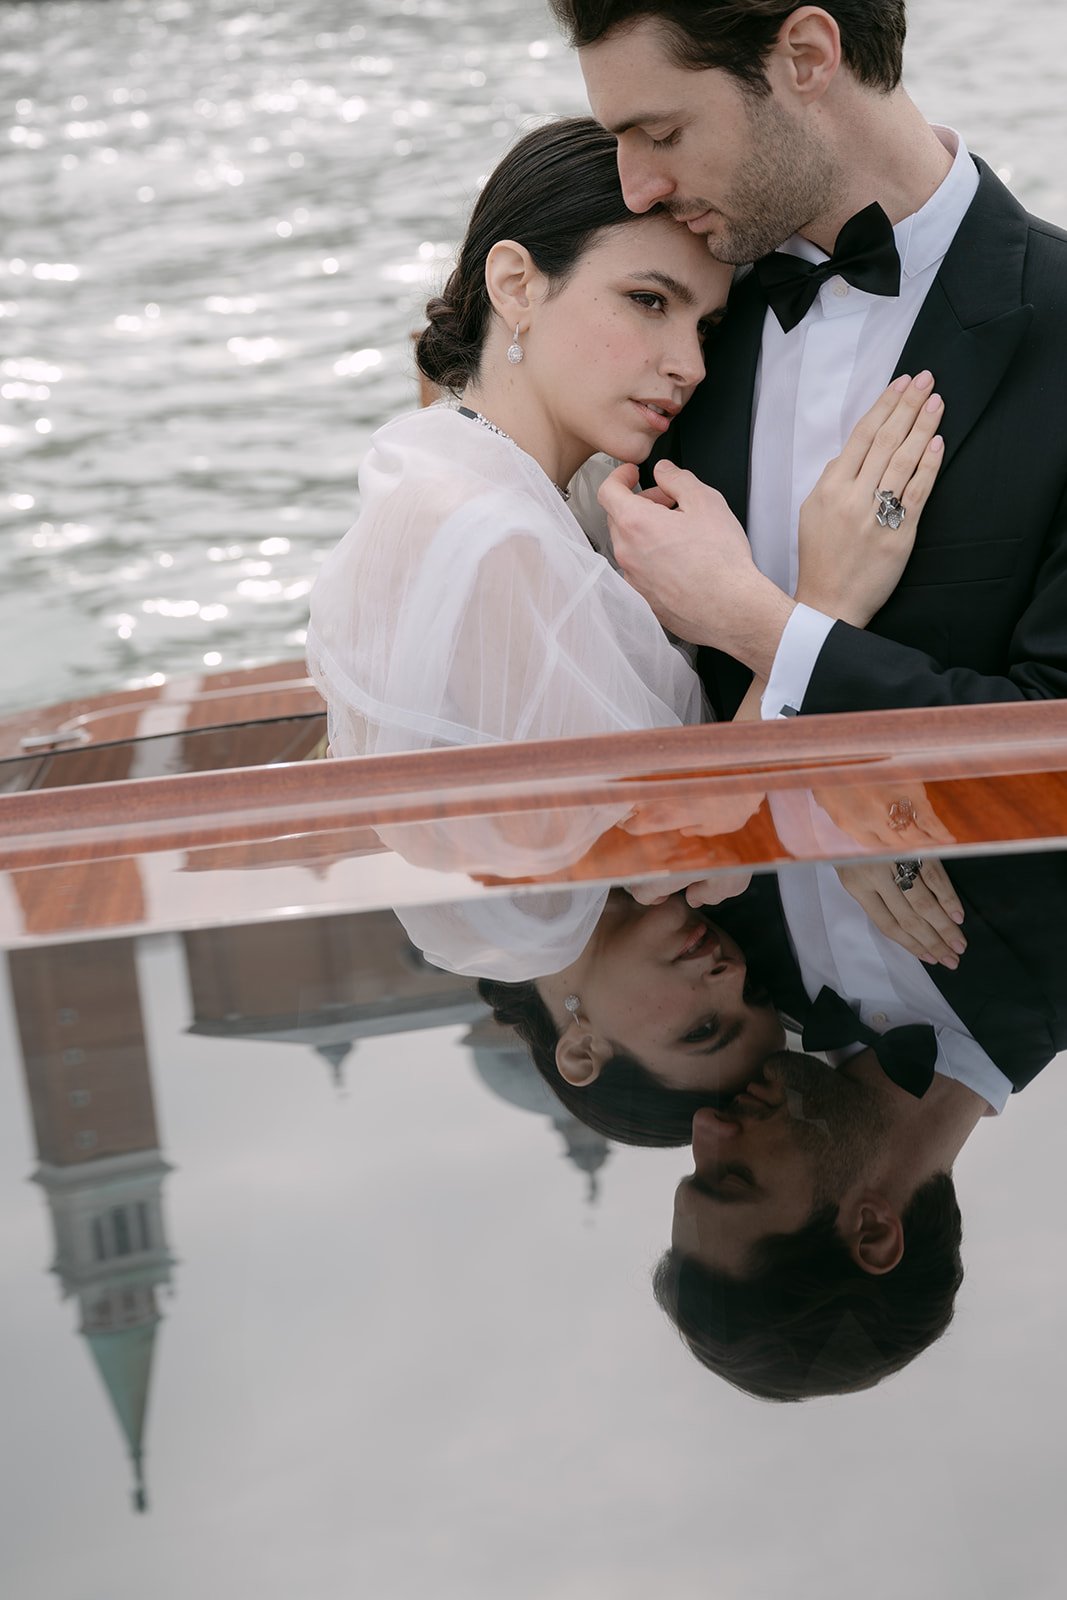 boat trip in Venice- getting married - wedding photographer.jpg